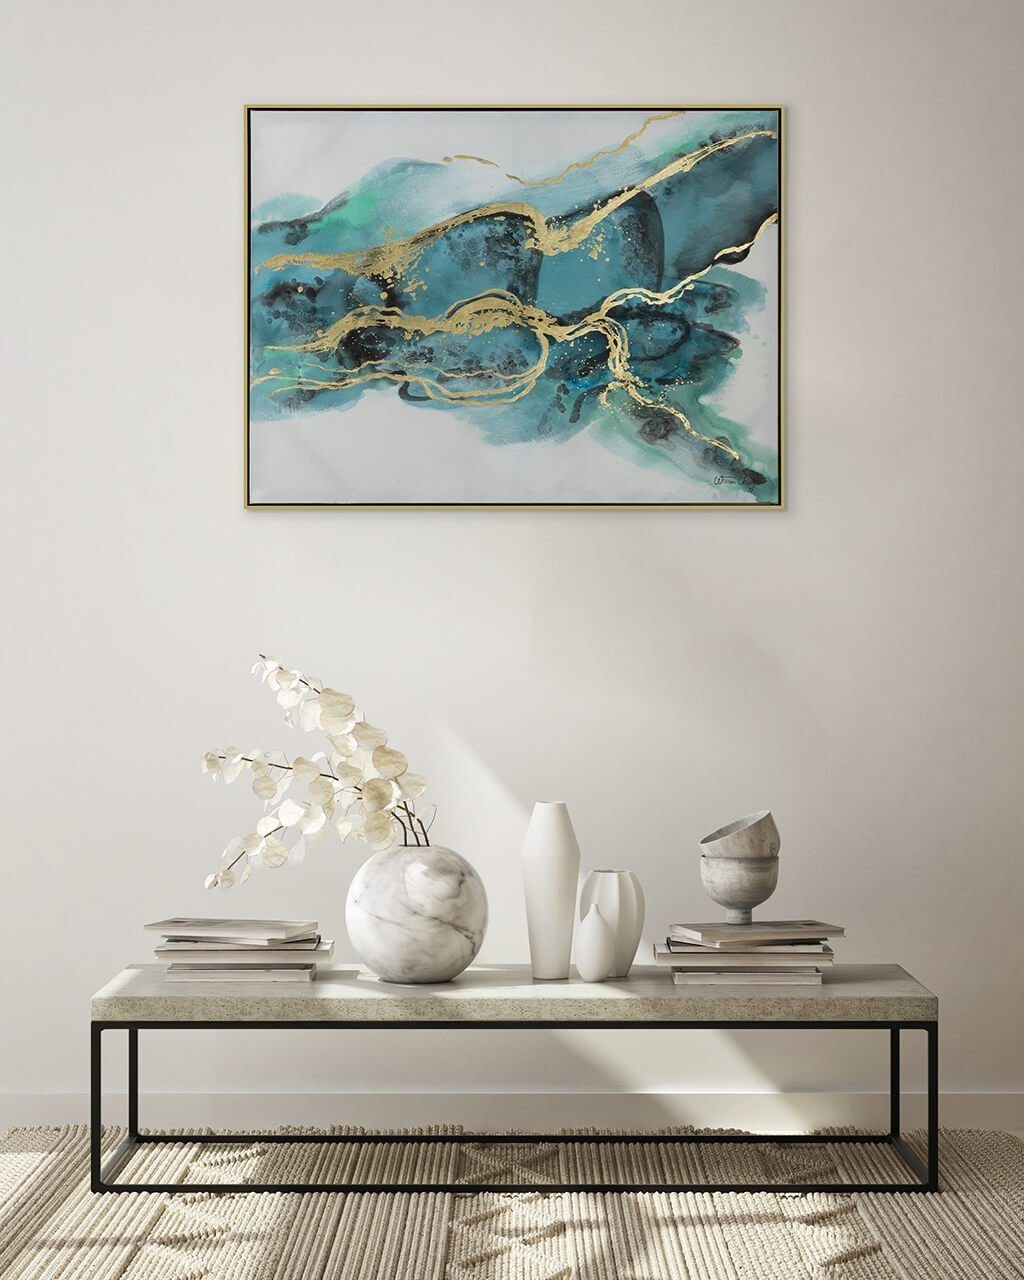 HANDGEMALT Magie 102.5x77.5 cm, Wohnzimmer Türkise Gemälde KUNSTLOFT 100% Leinwandbild Wandbild